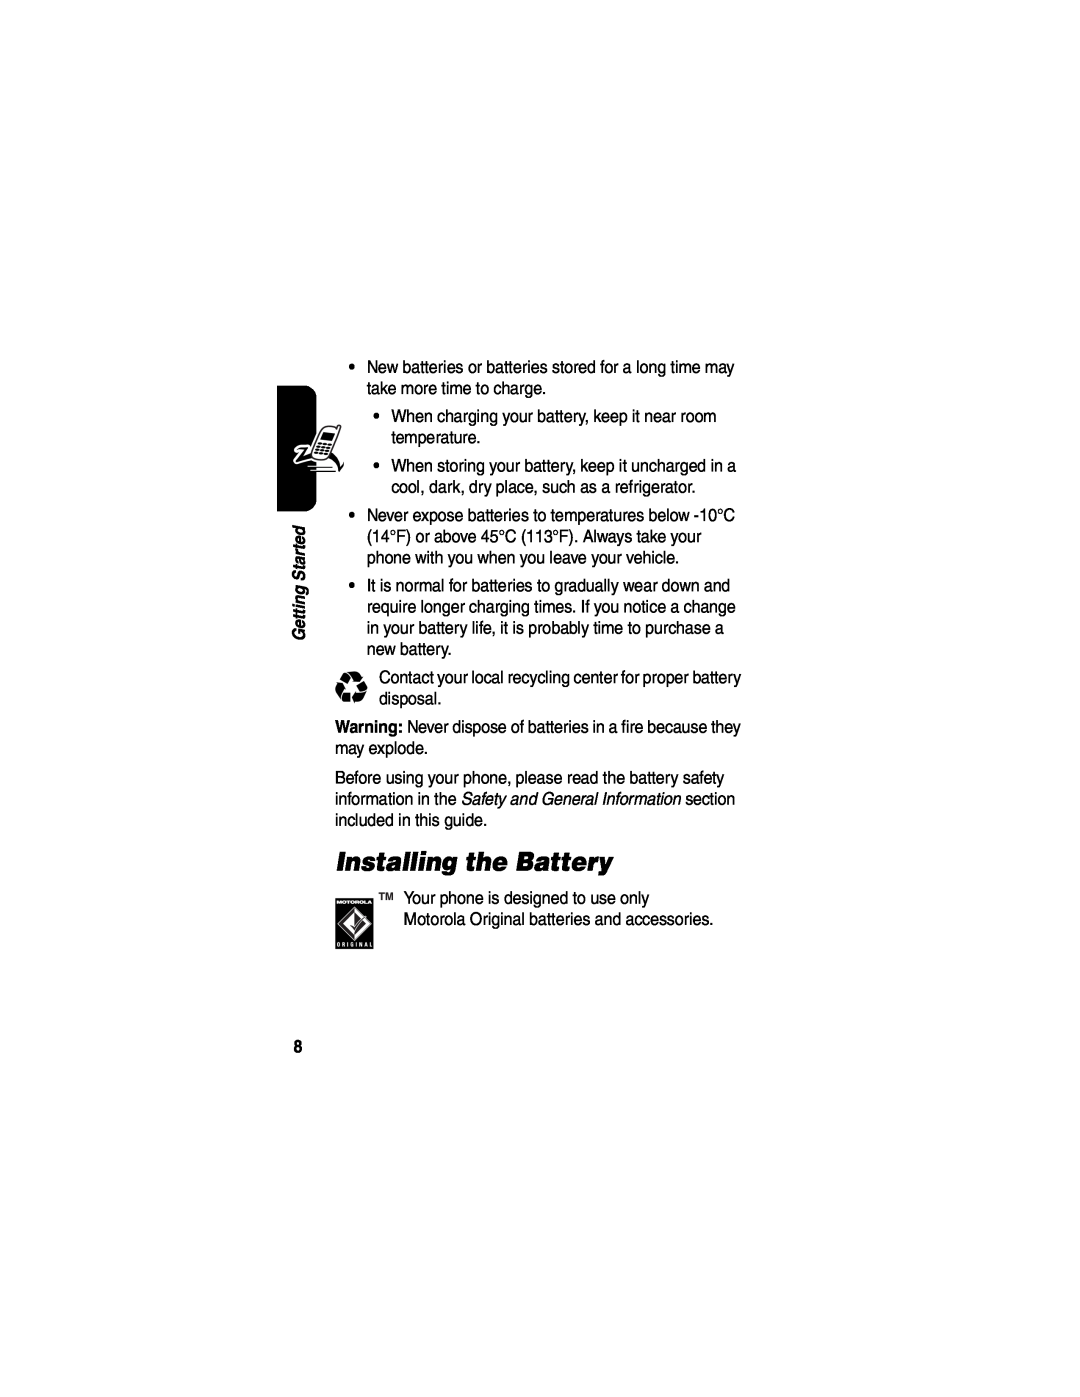 Motorola V555 manual Installing the Battery 